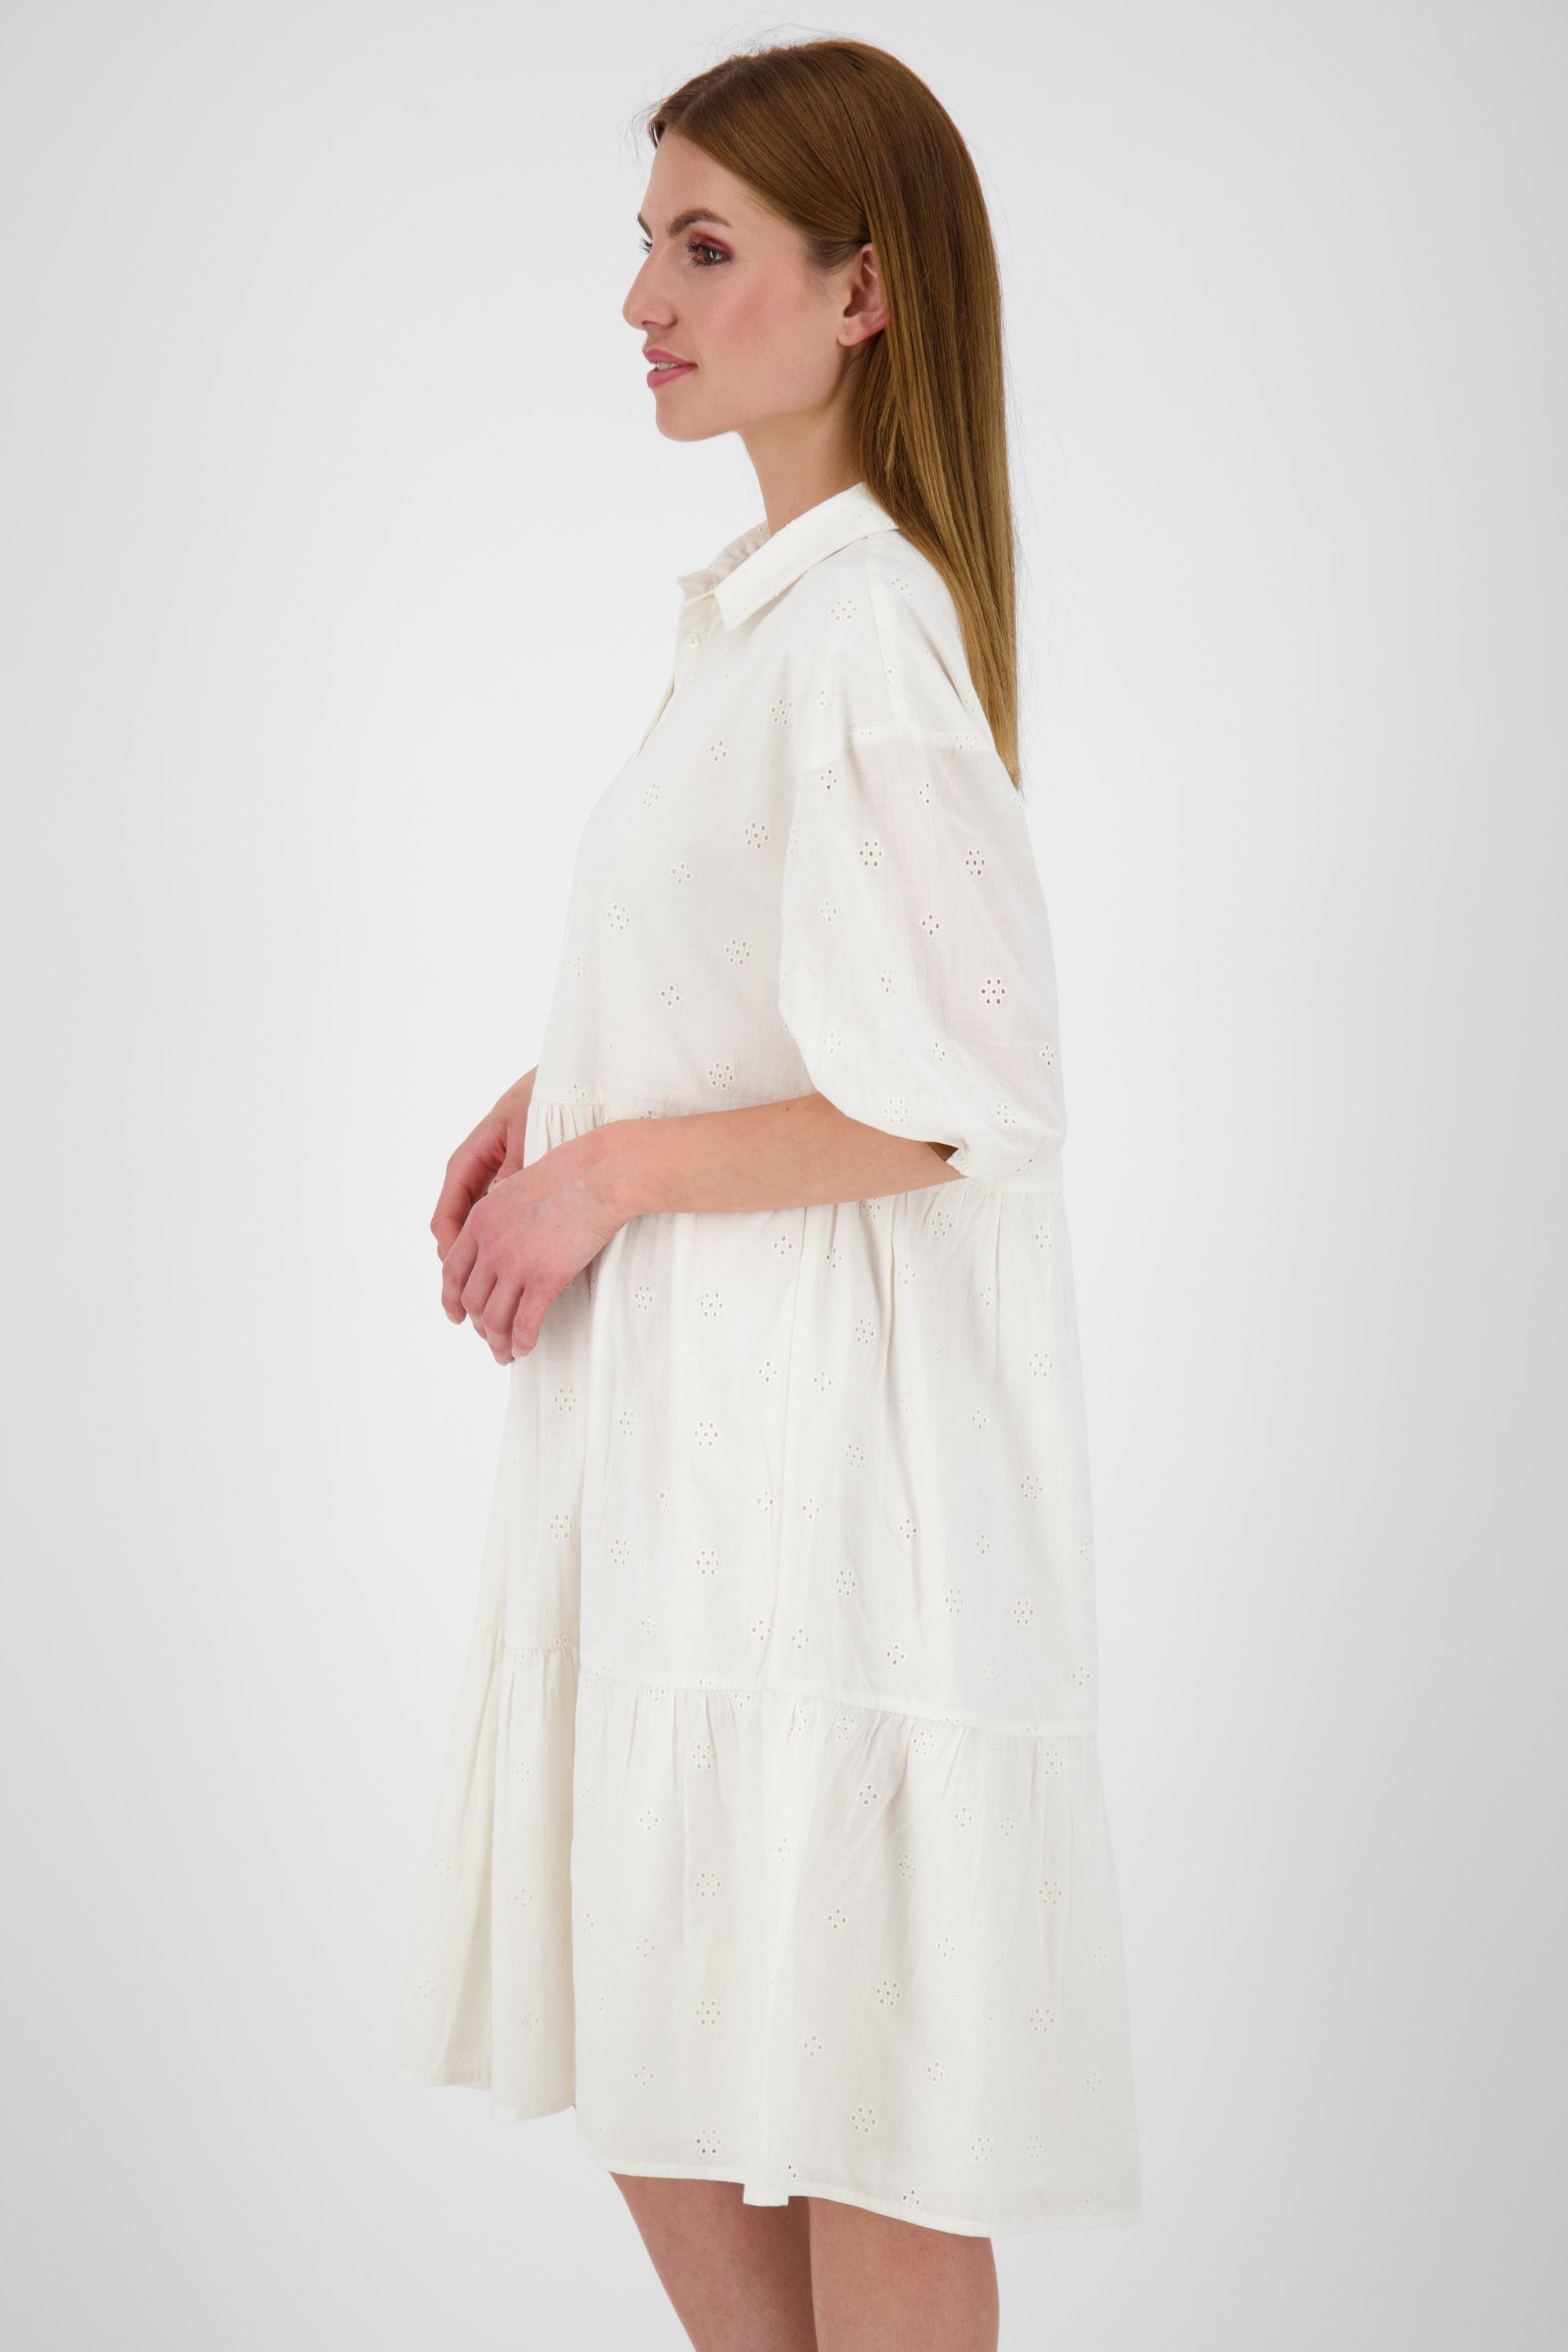 E & SalomeAK Kickin Sommerkleid, white Kleid Dress Damen Alife Jerseykleid